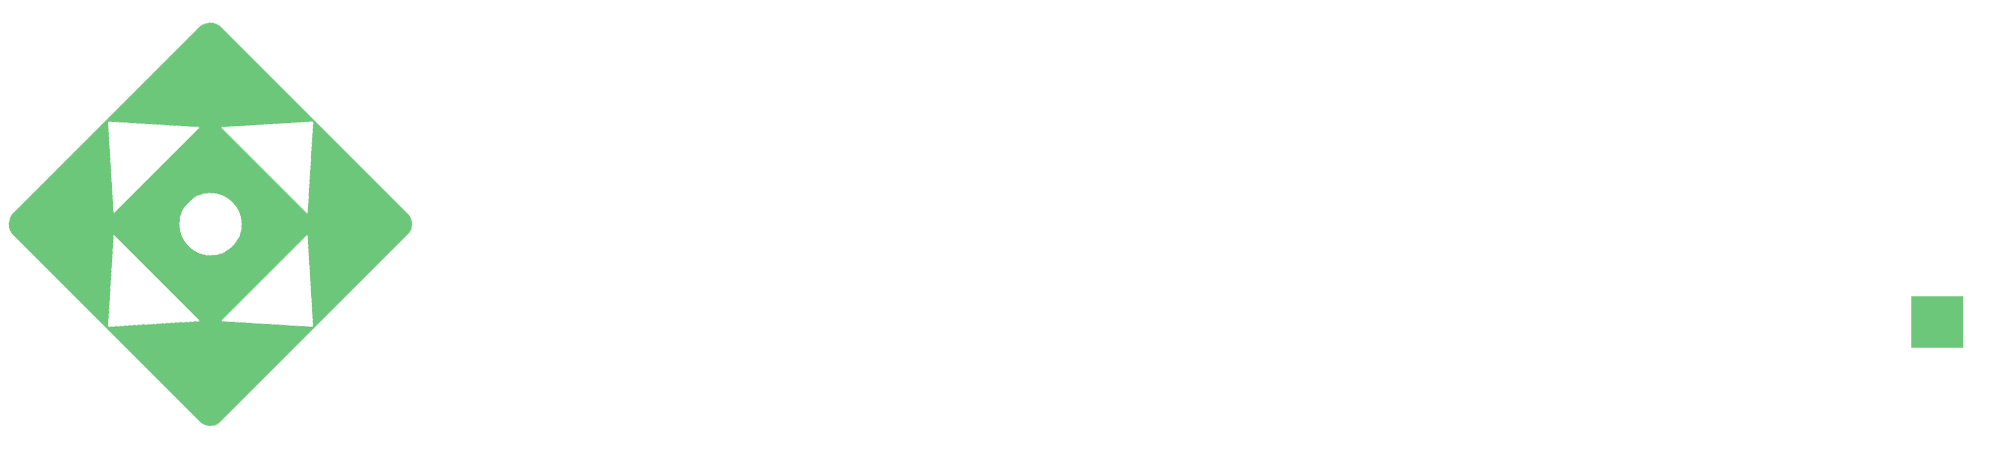 Leaping - Creative Multipurpose Template